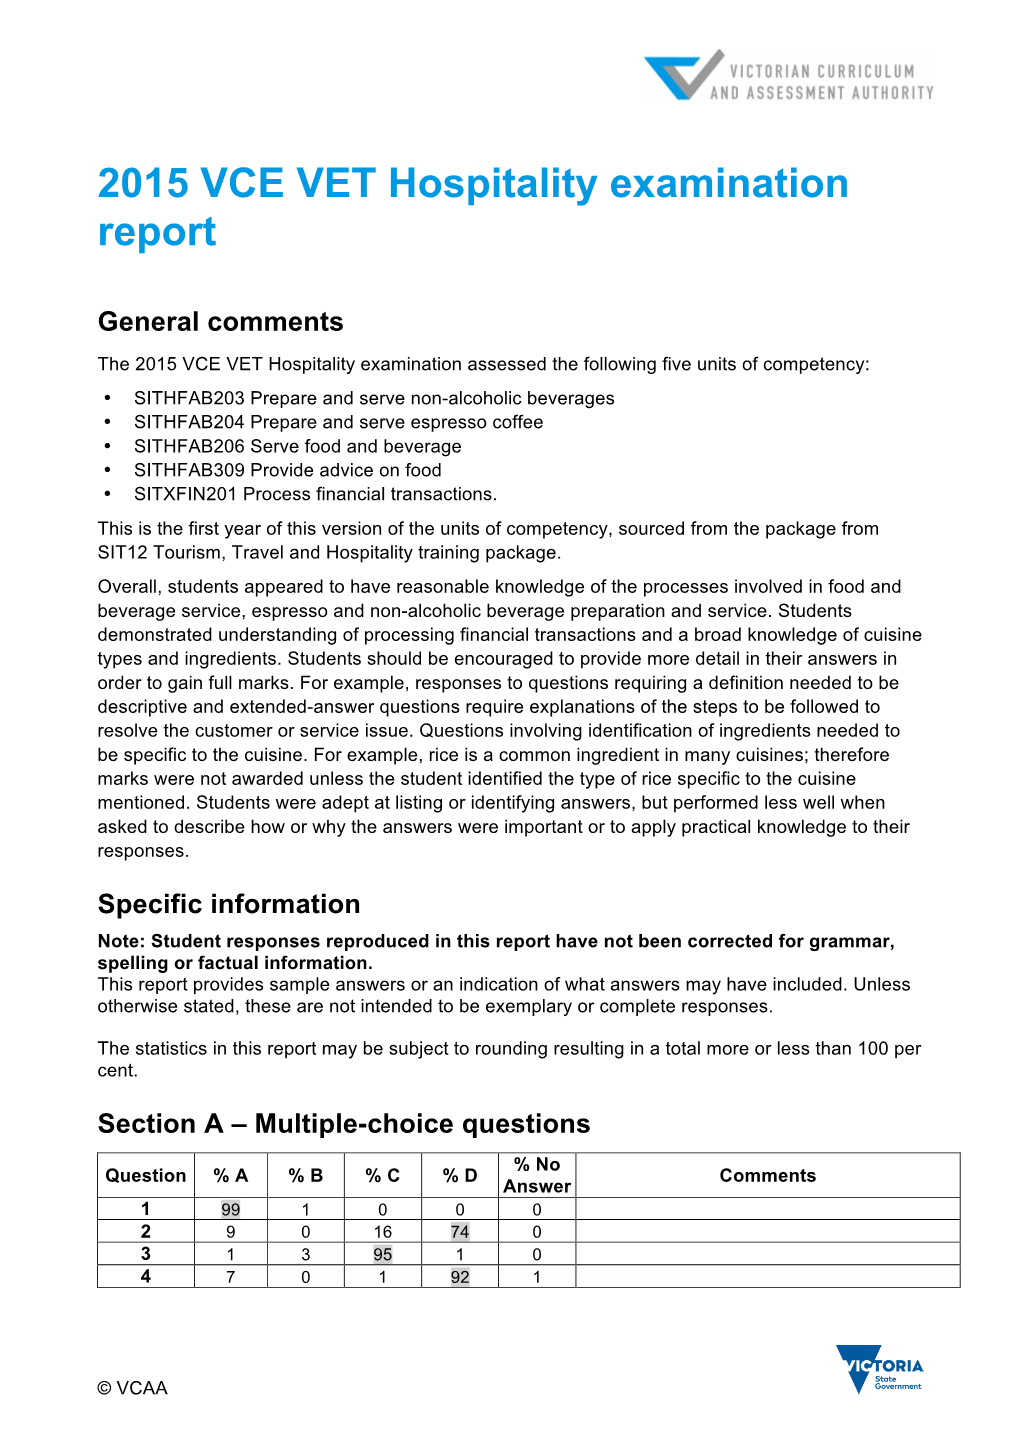 2015 VCE VET Hospitality Examination Report